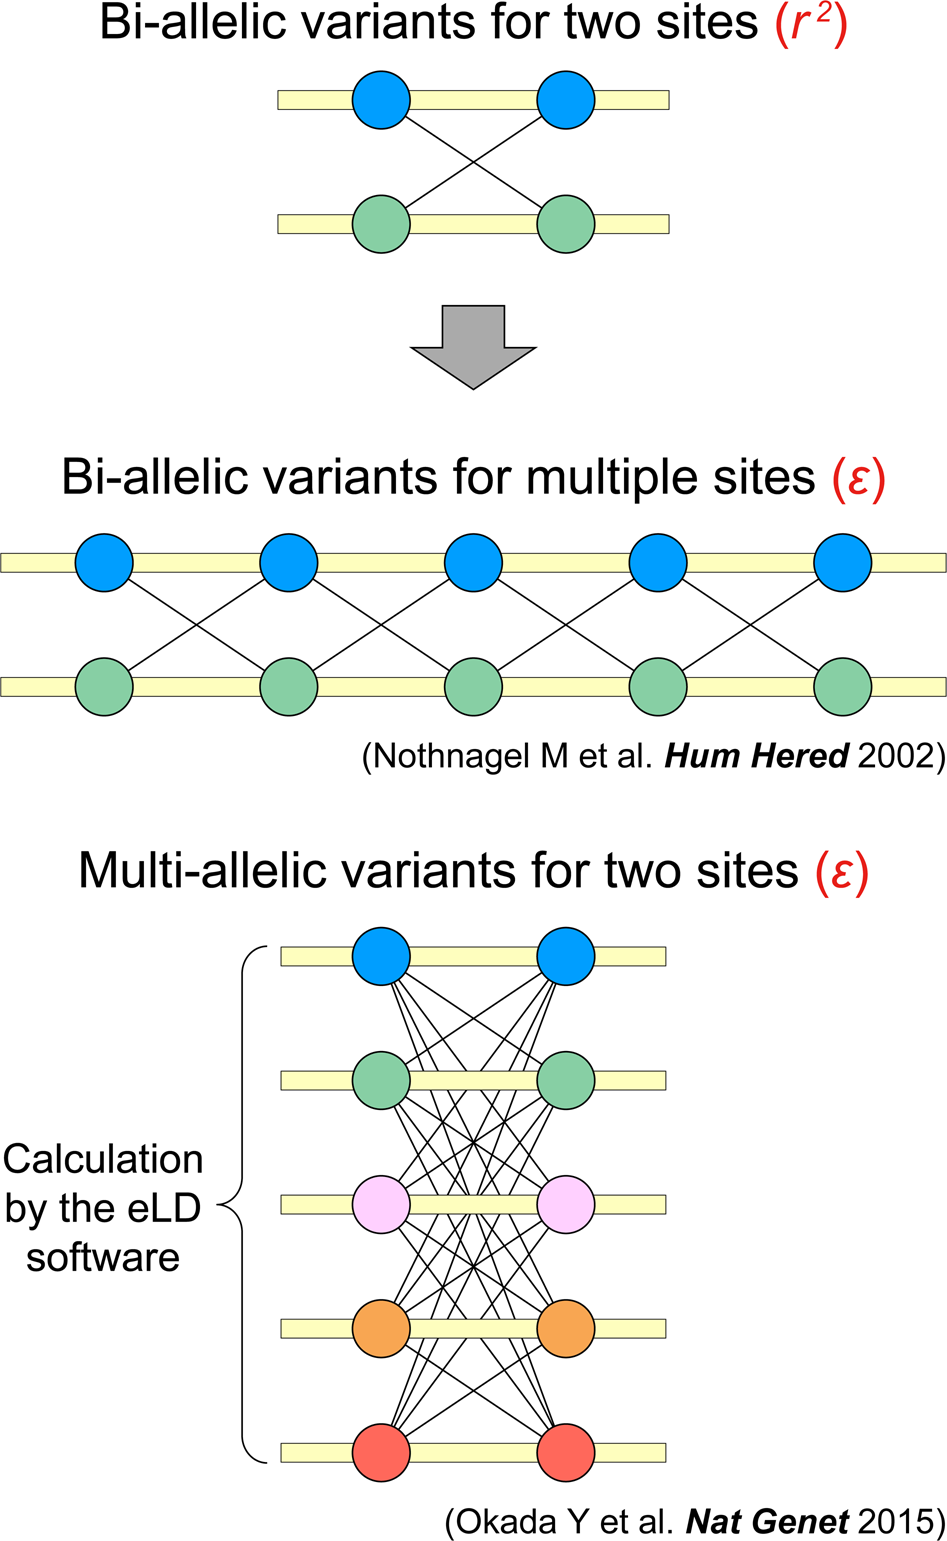 eLD: entropy-based linkage disequilibrium index between multiallelic sites  | Human Genome Variation